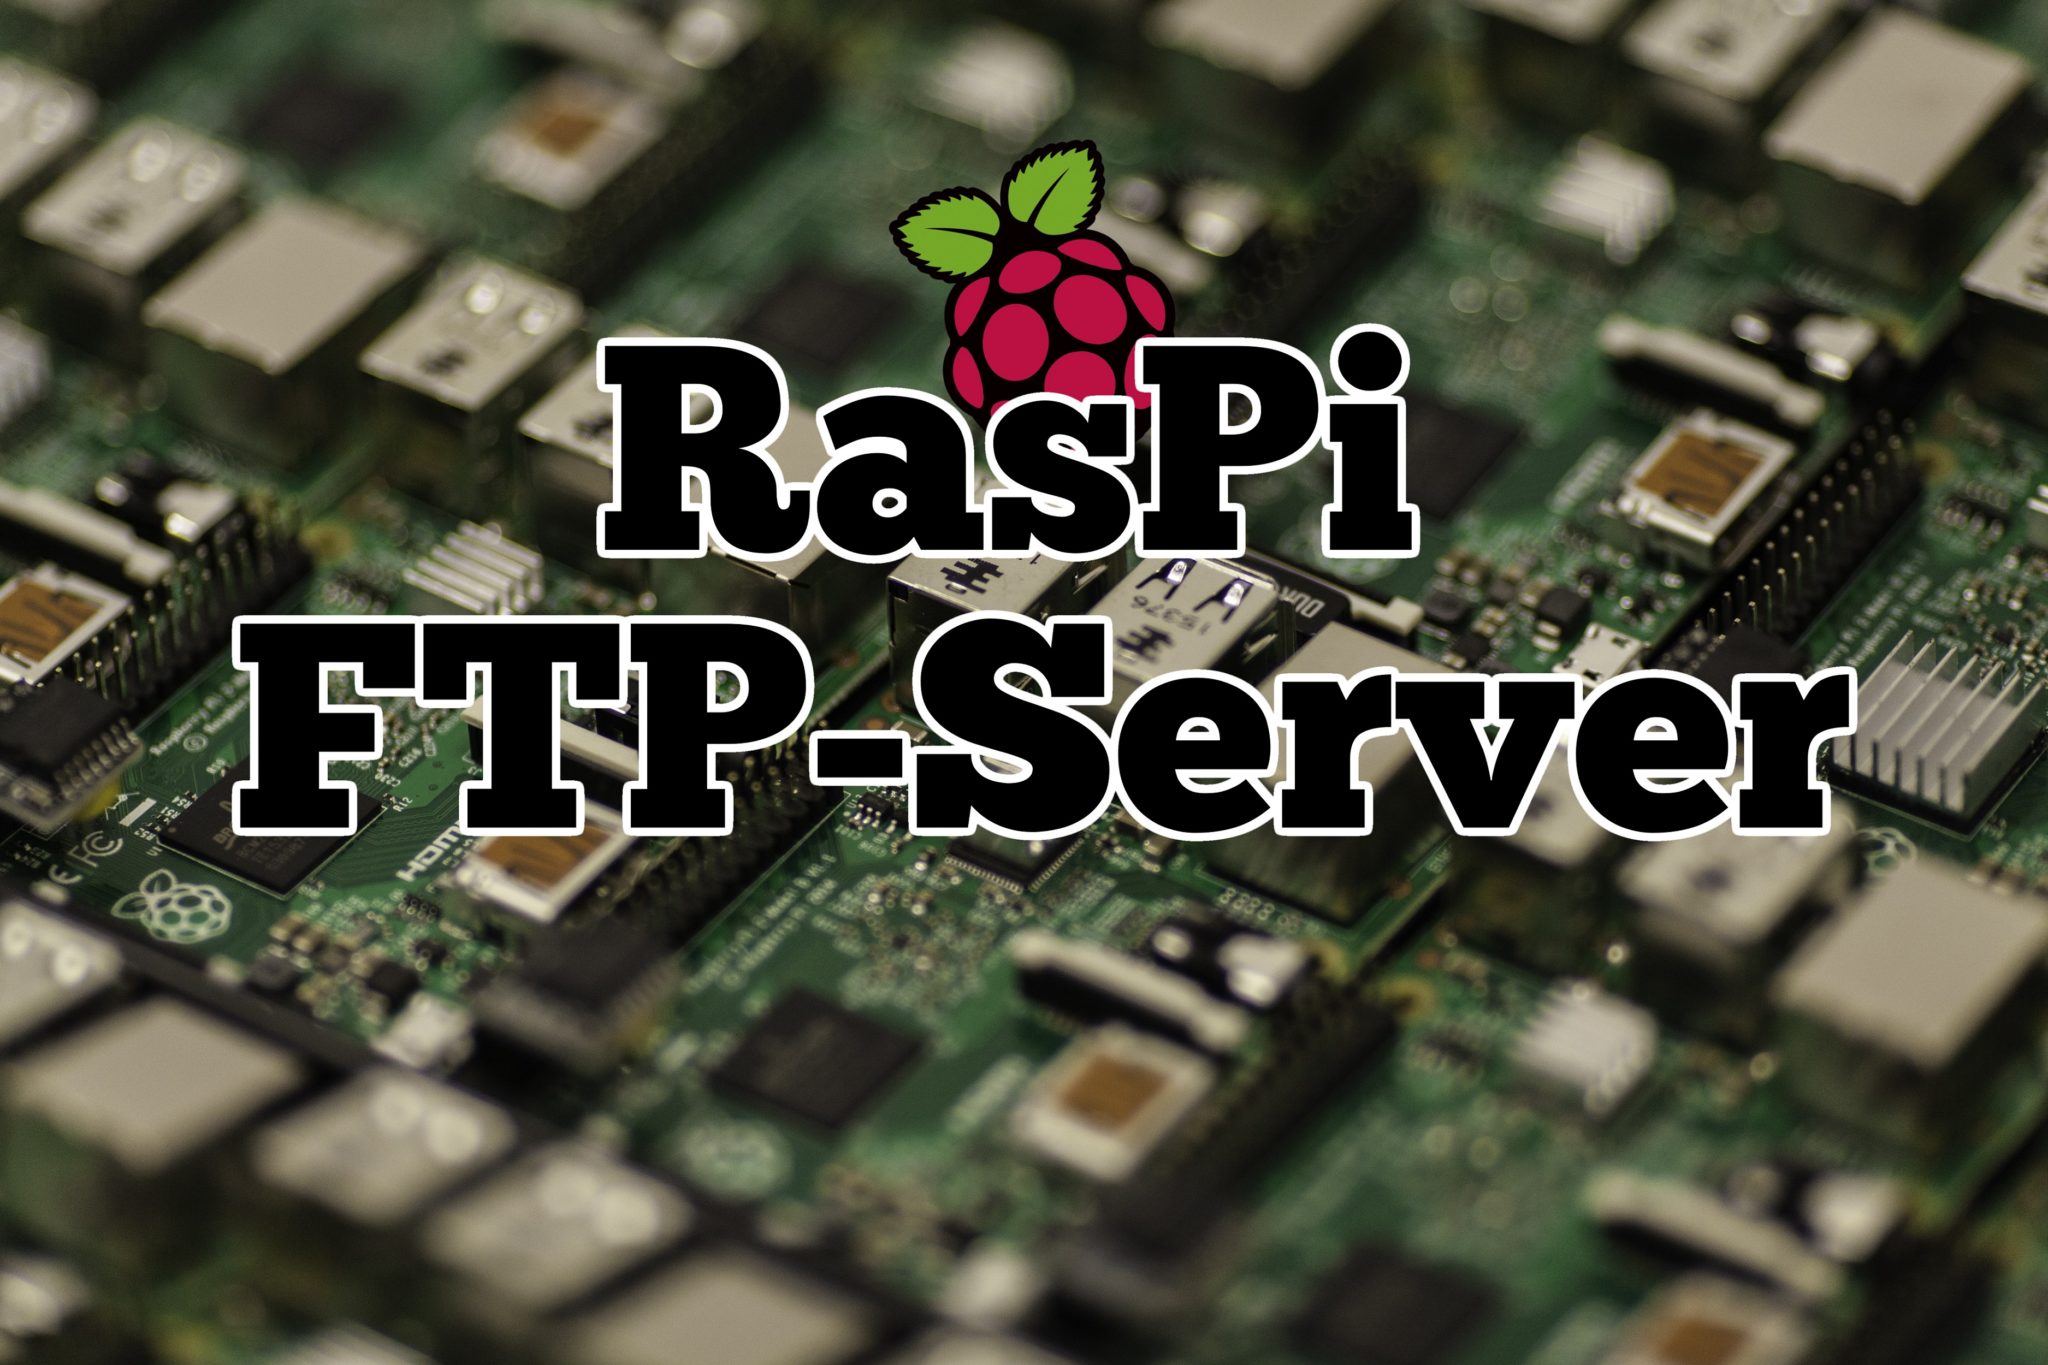 raspberry pi ftp server